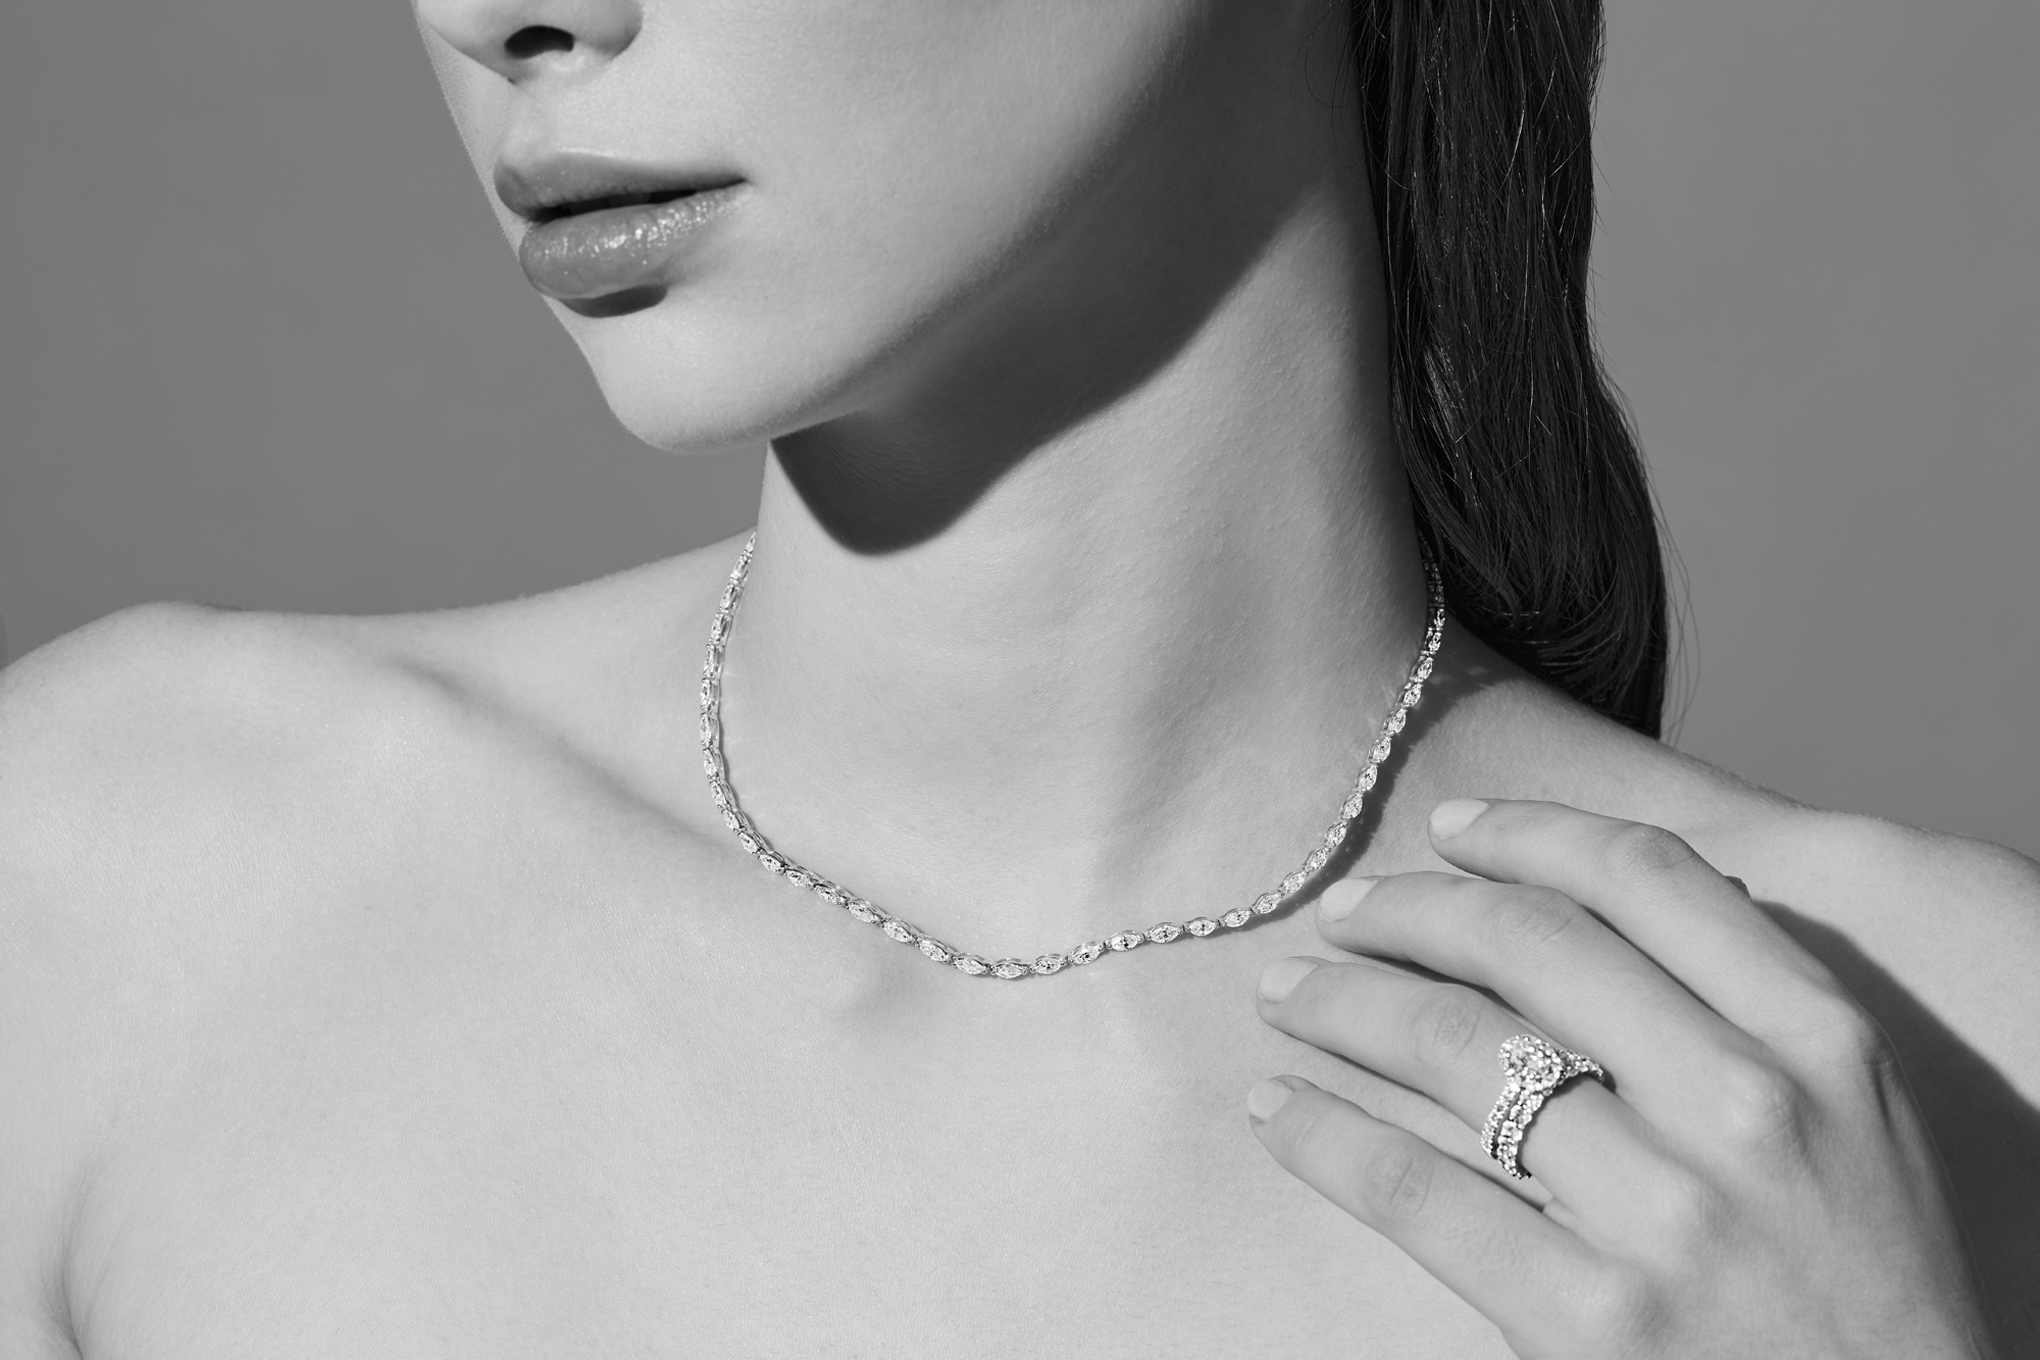 Jewelry Photographer Kate Benson photography portfolio jewelry on models